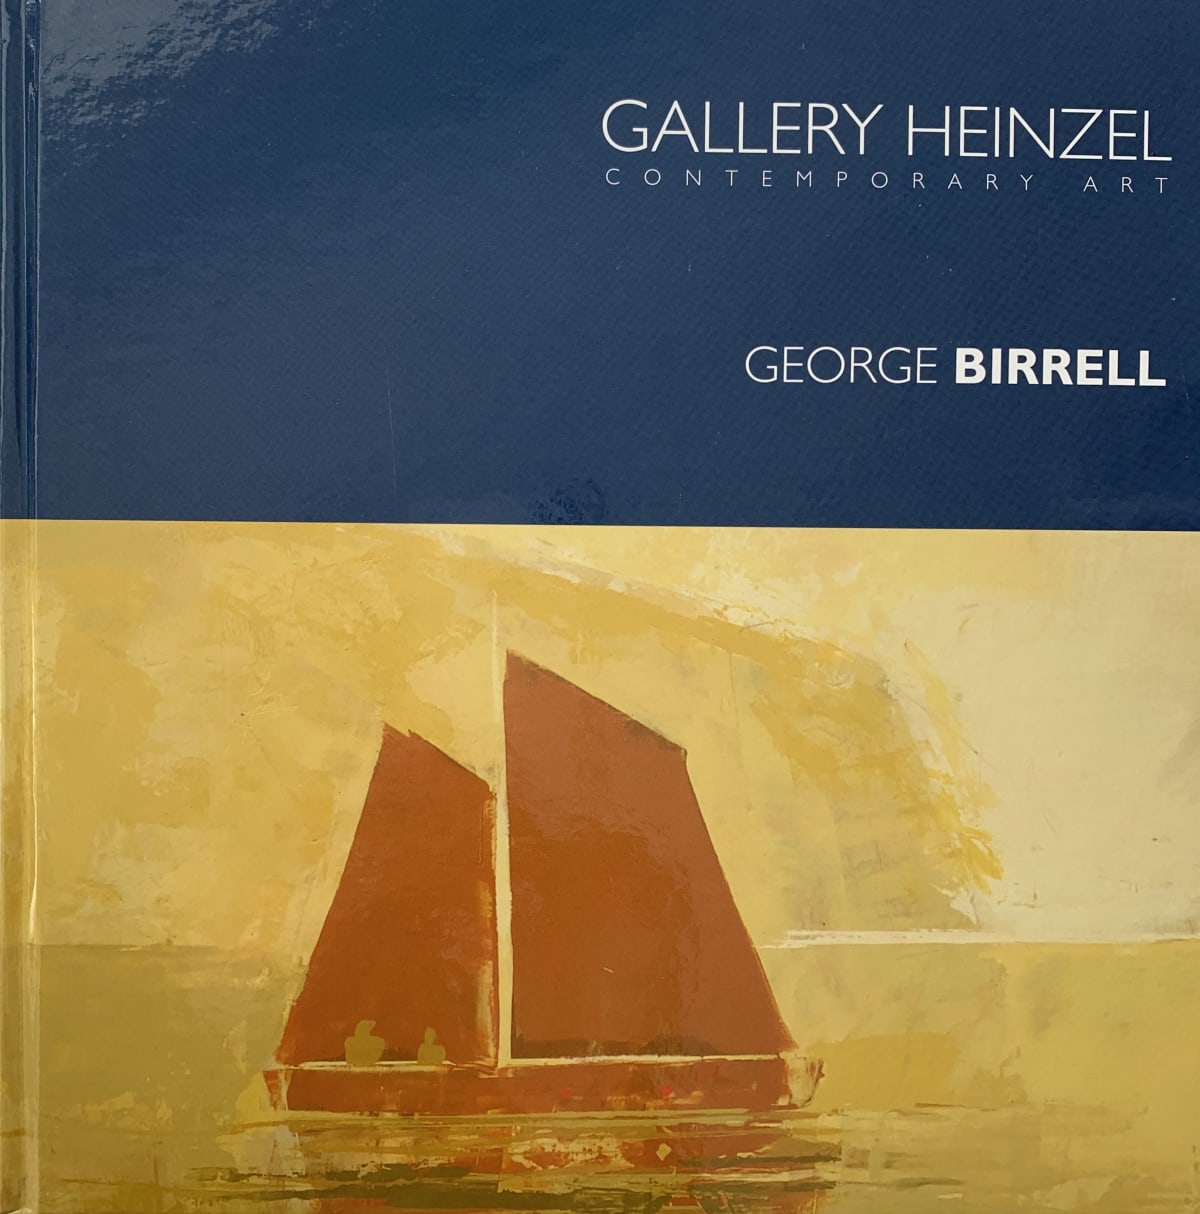 Gallery Heinzel presents GEORGE BIRRELL